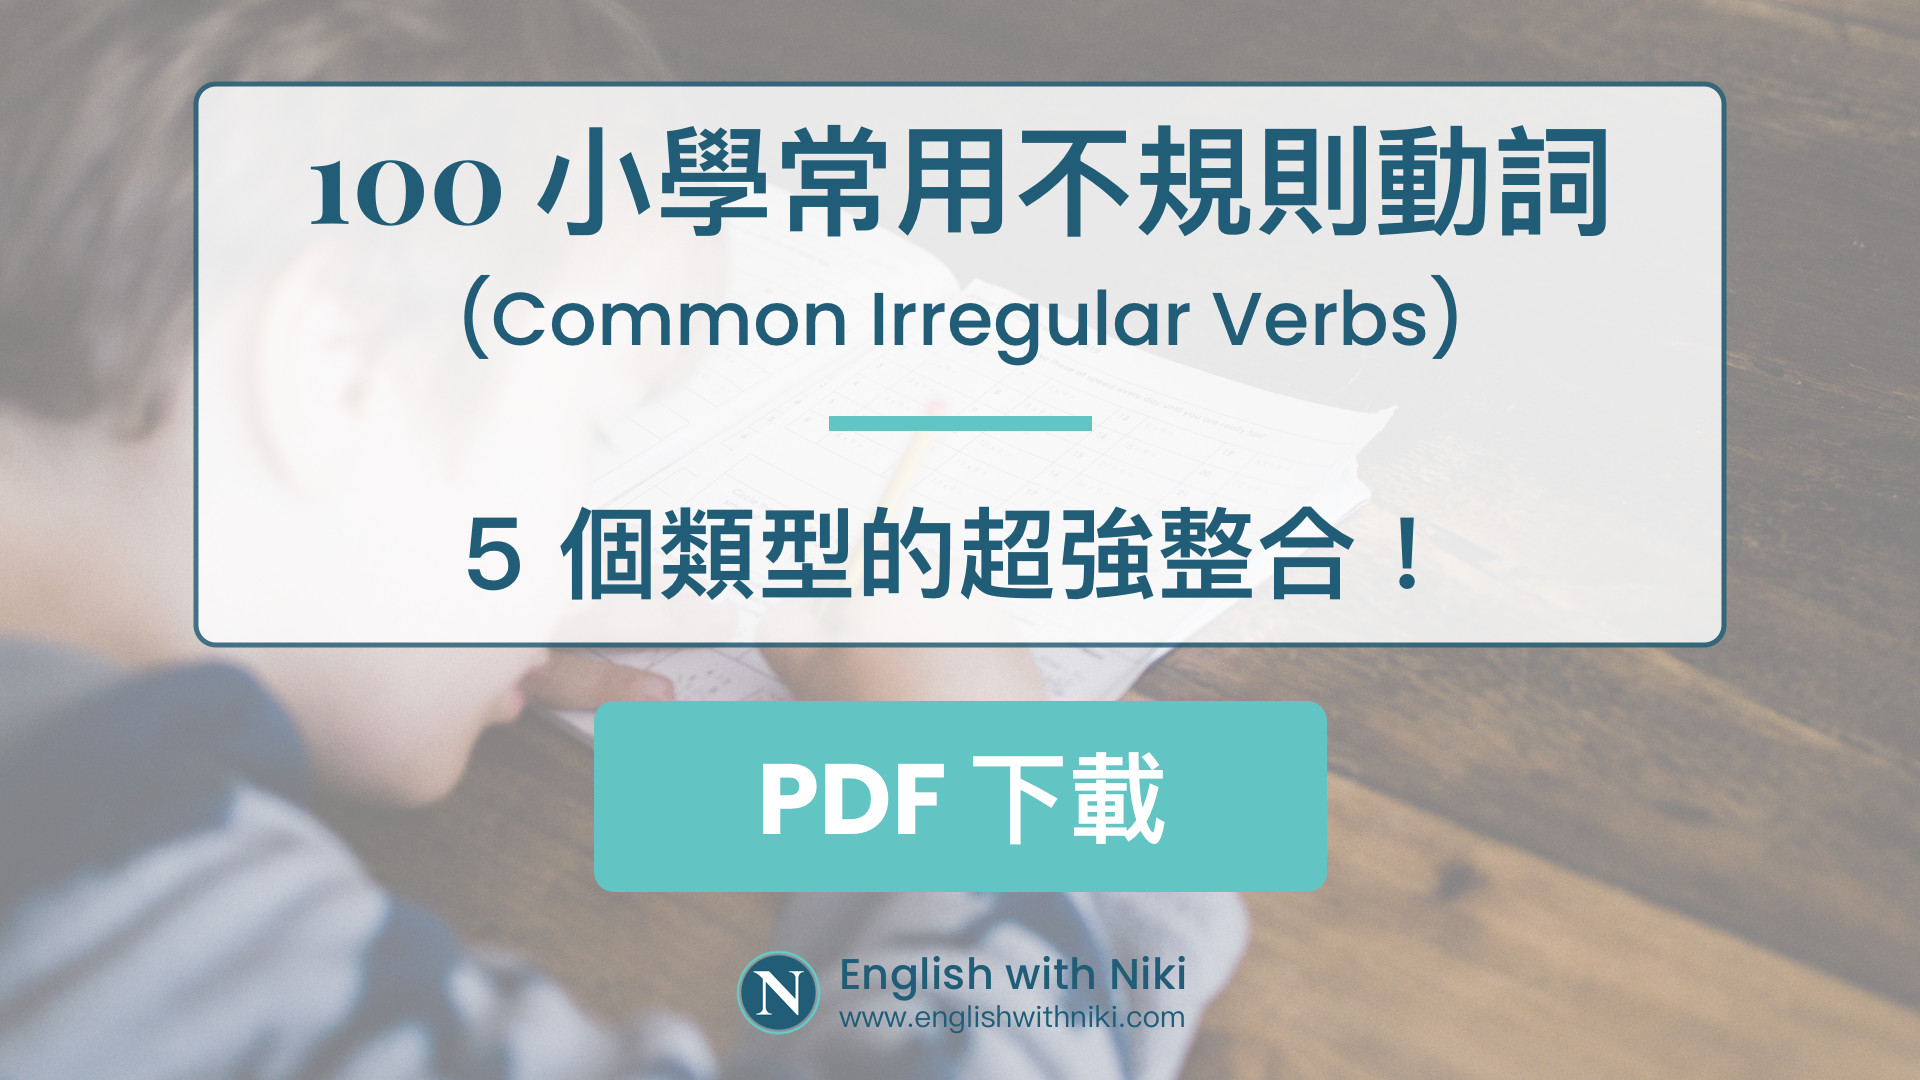 Irregular Verb Table PDF Download 100 Common Irregular Verbs Primary School 小學100常用不規則動詞 小學 verb table pdf